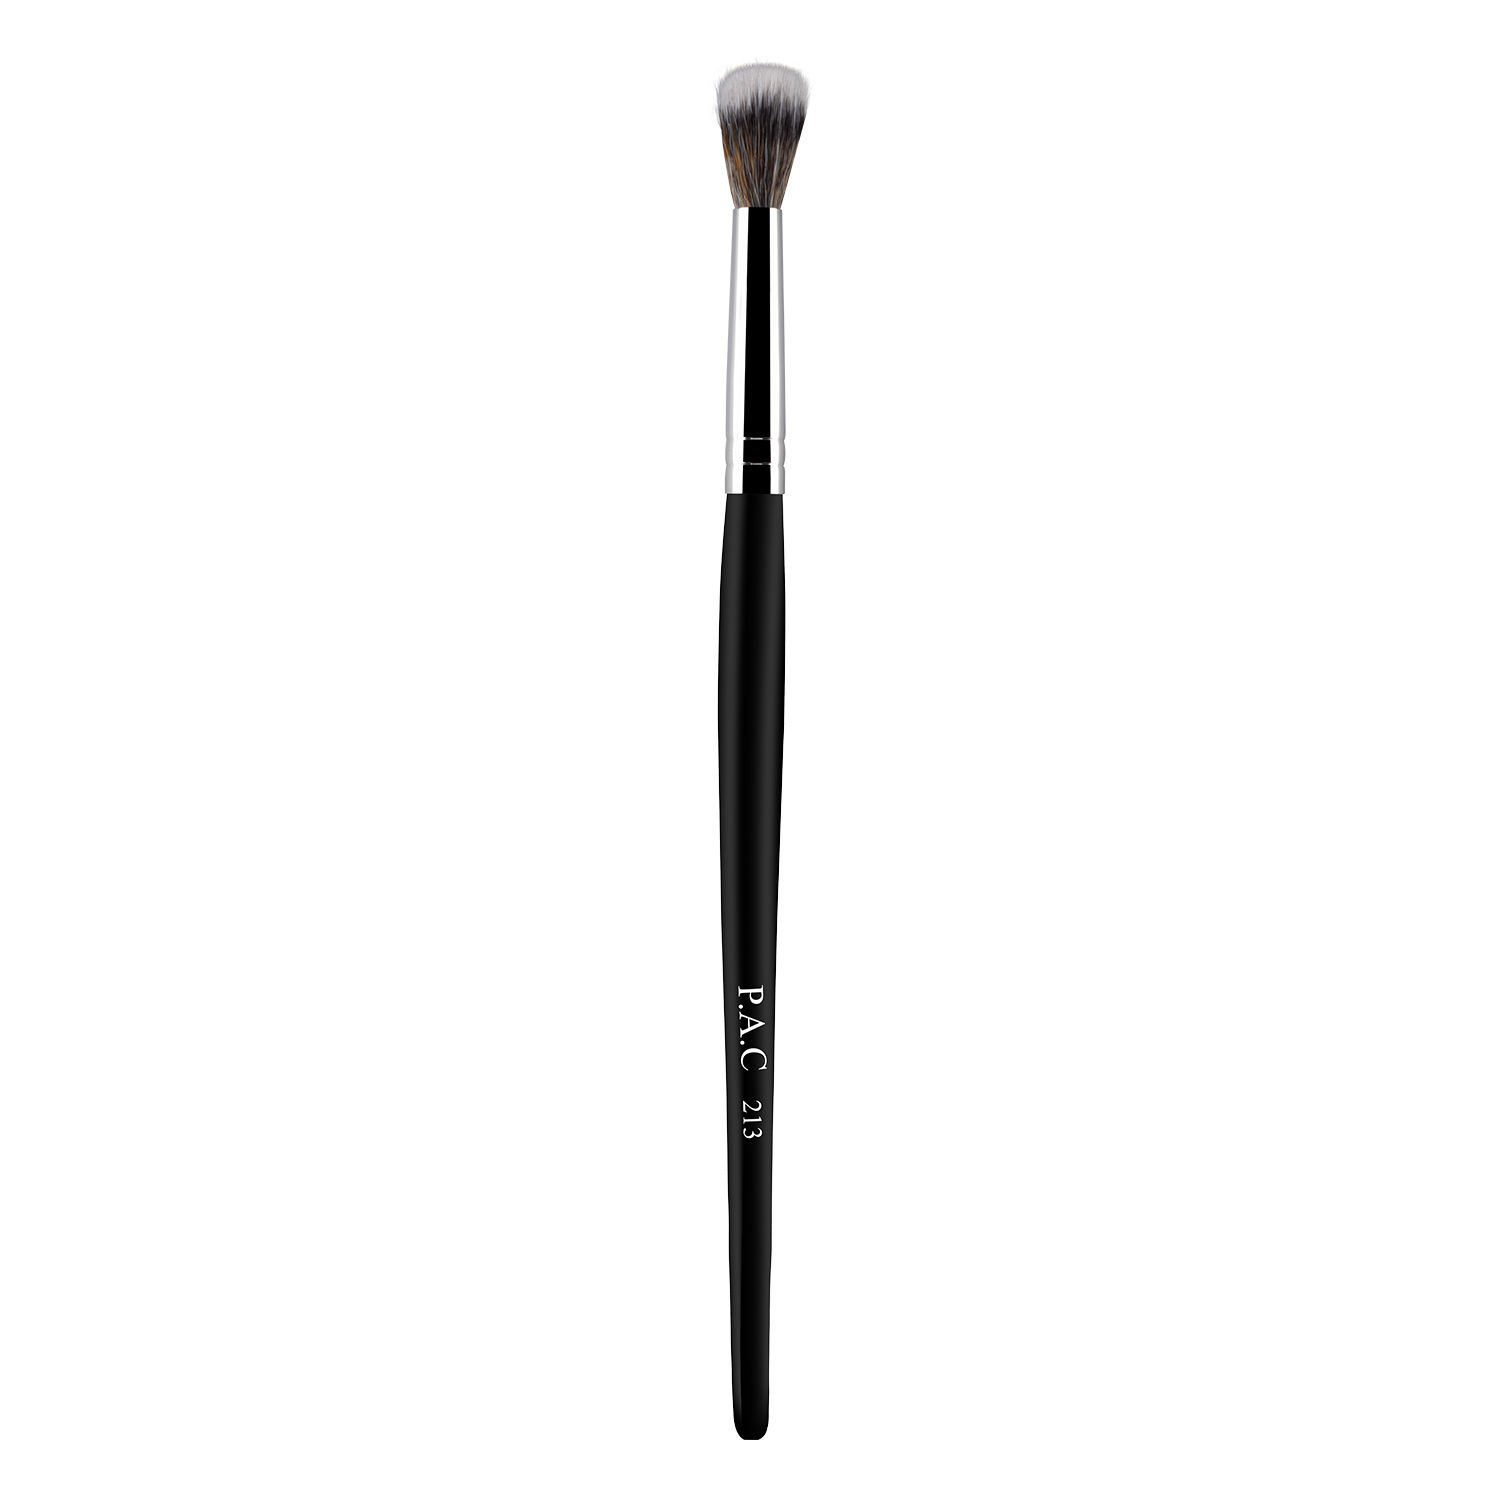 PAC Blending Eyeshadow Brush - 213